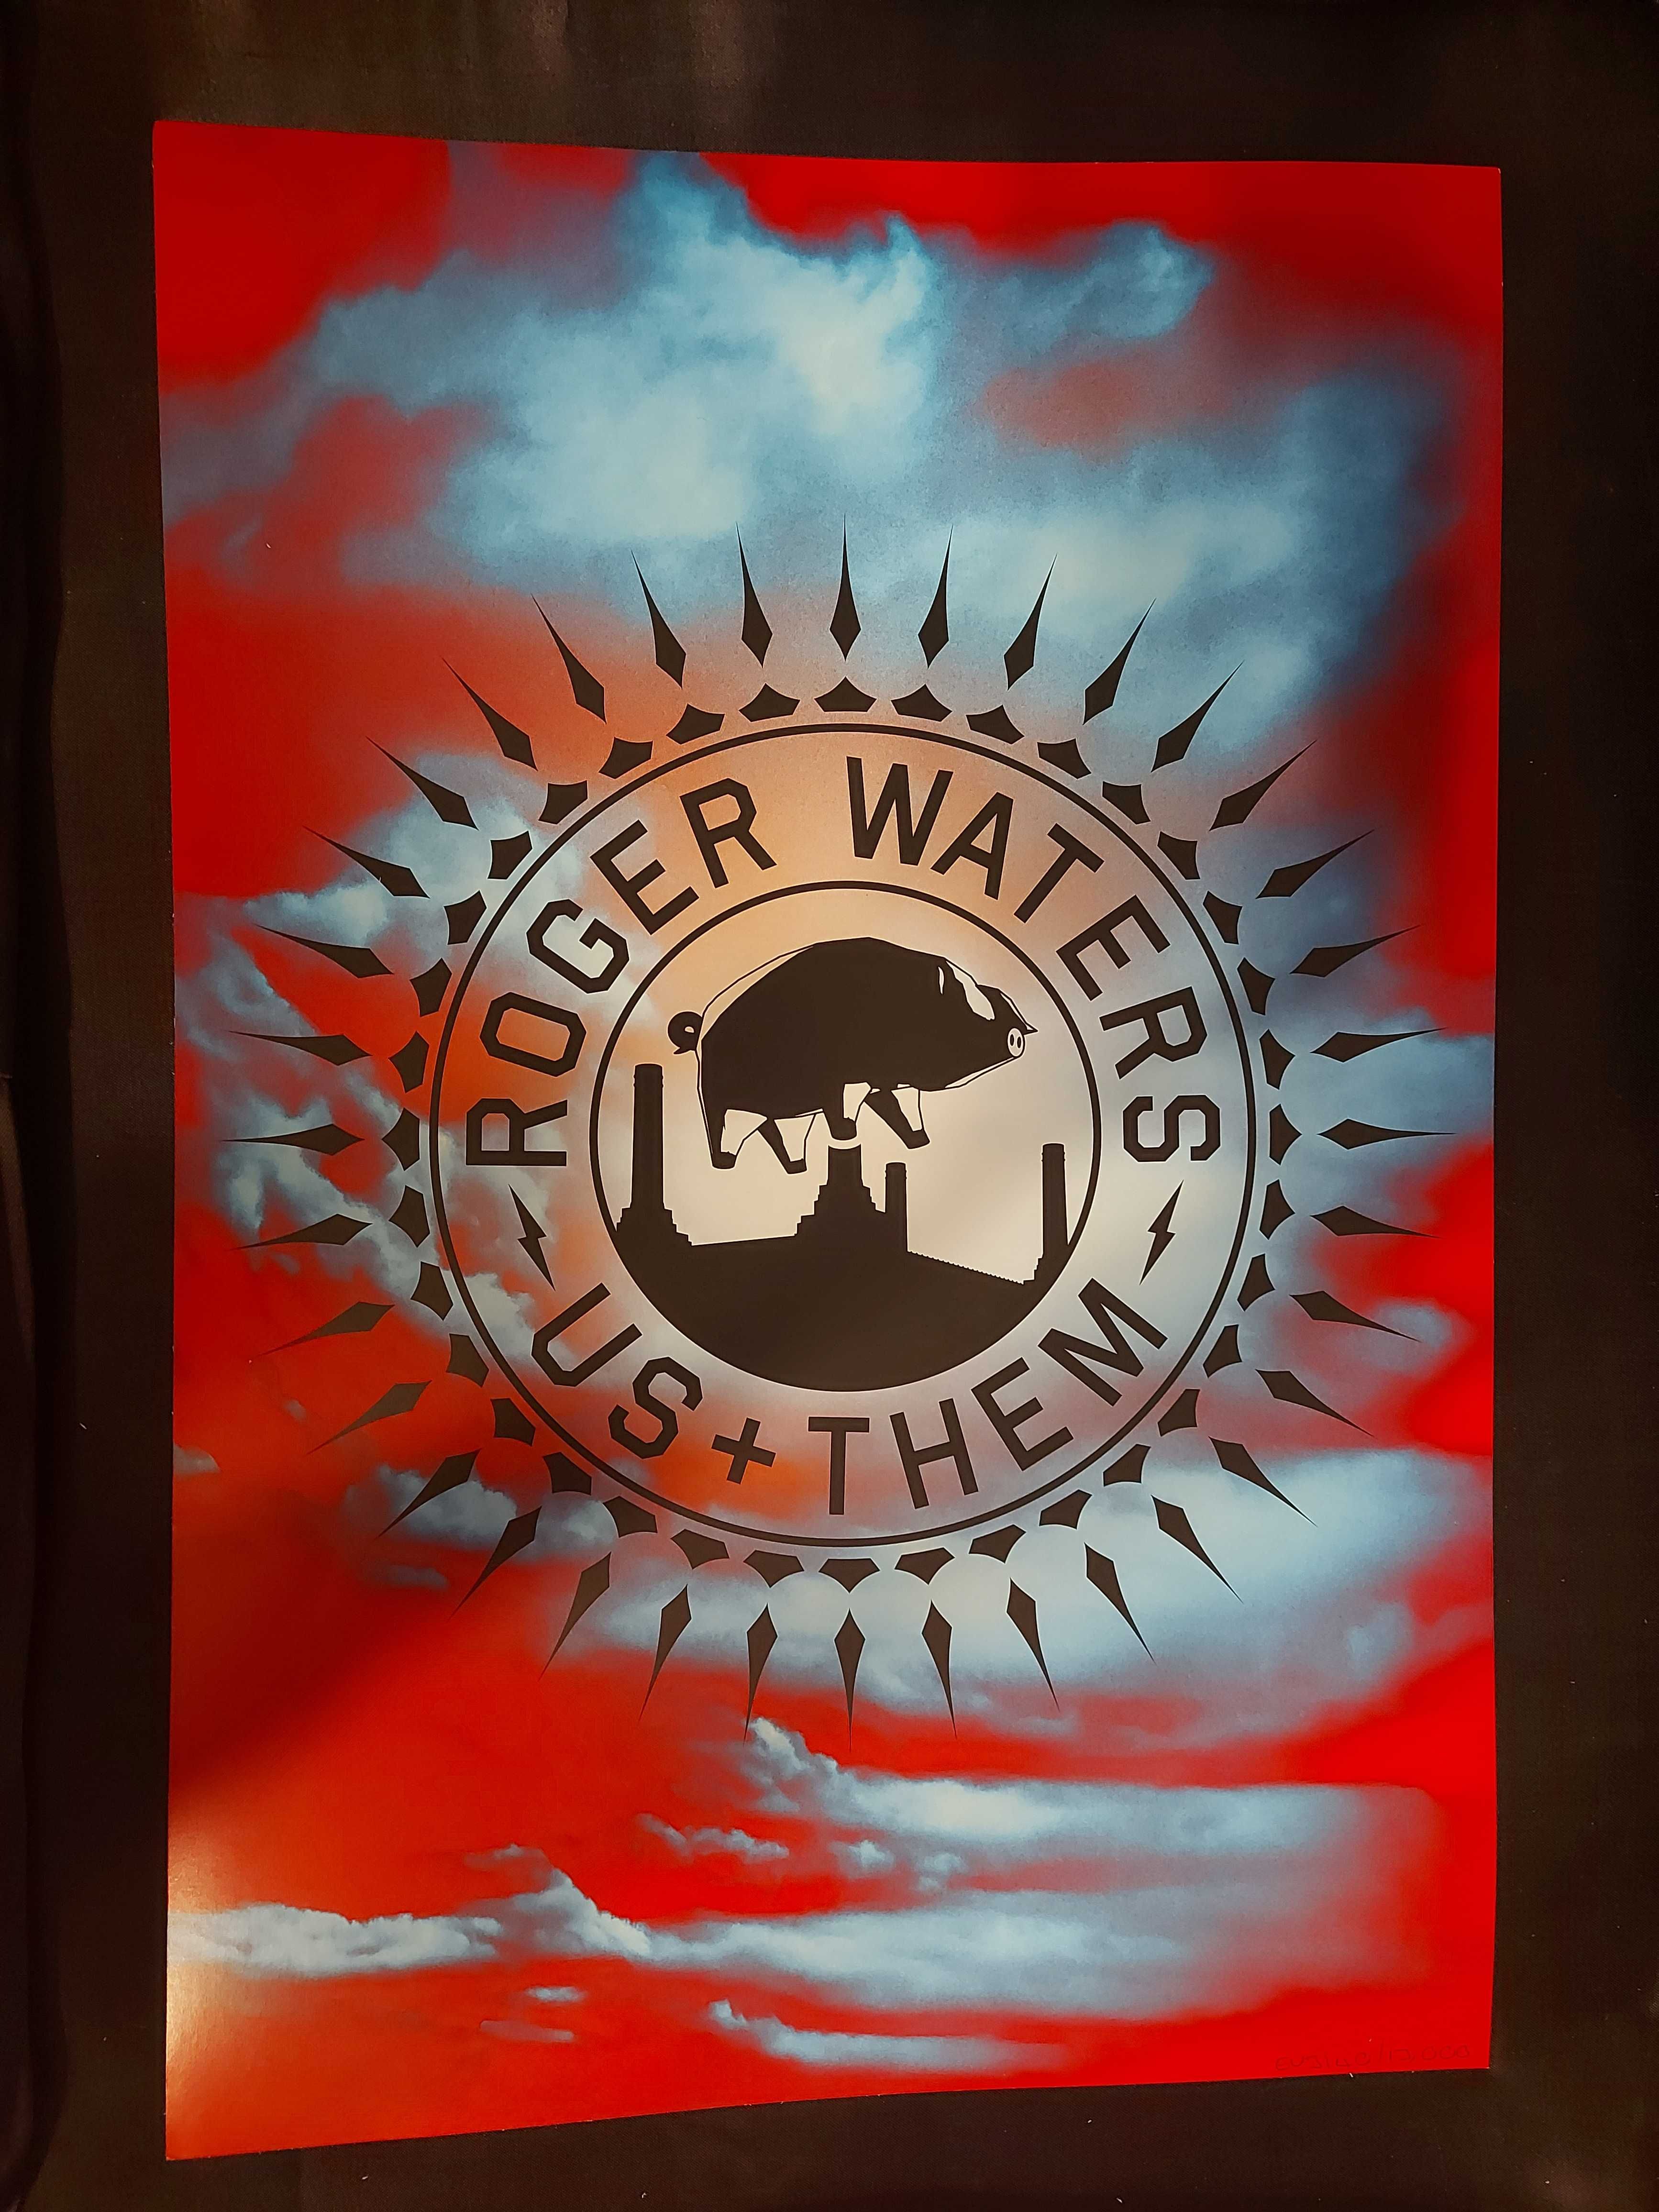 Plakaty z koncertu Roger Waters 2018 Us+Them